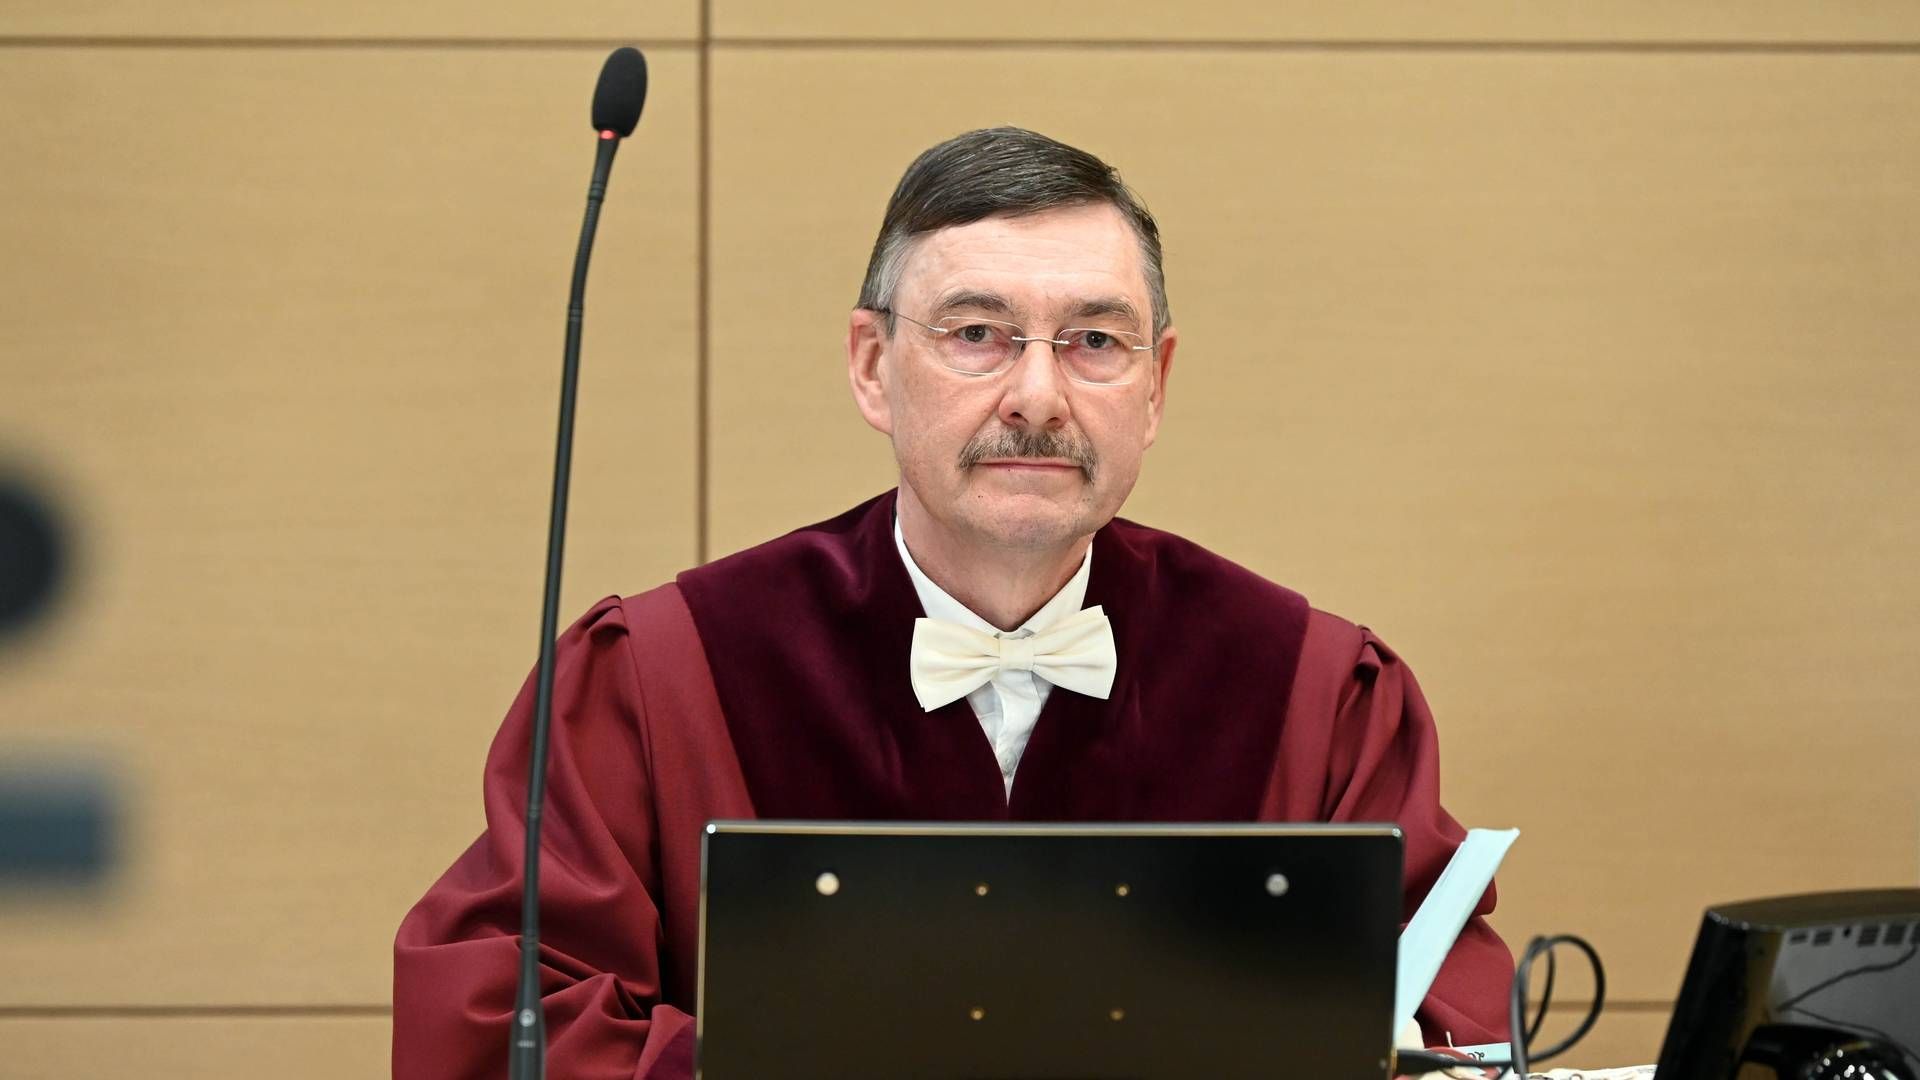 Jürgen Ellenberger, Vorsitzender Richter des elften Zivilsenats am BGH | Foto: picture alliance/dpa | Uli Deck